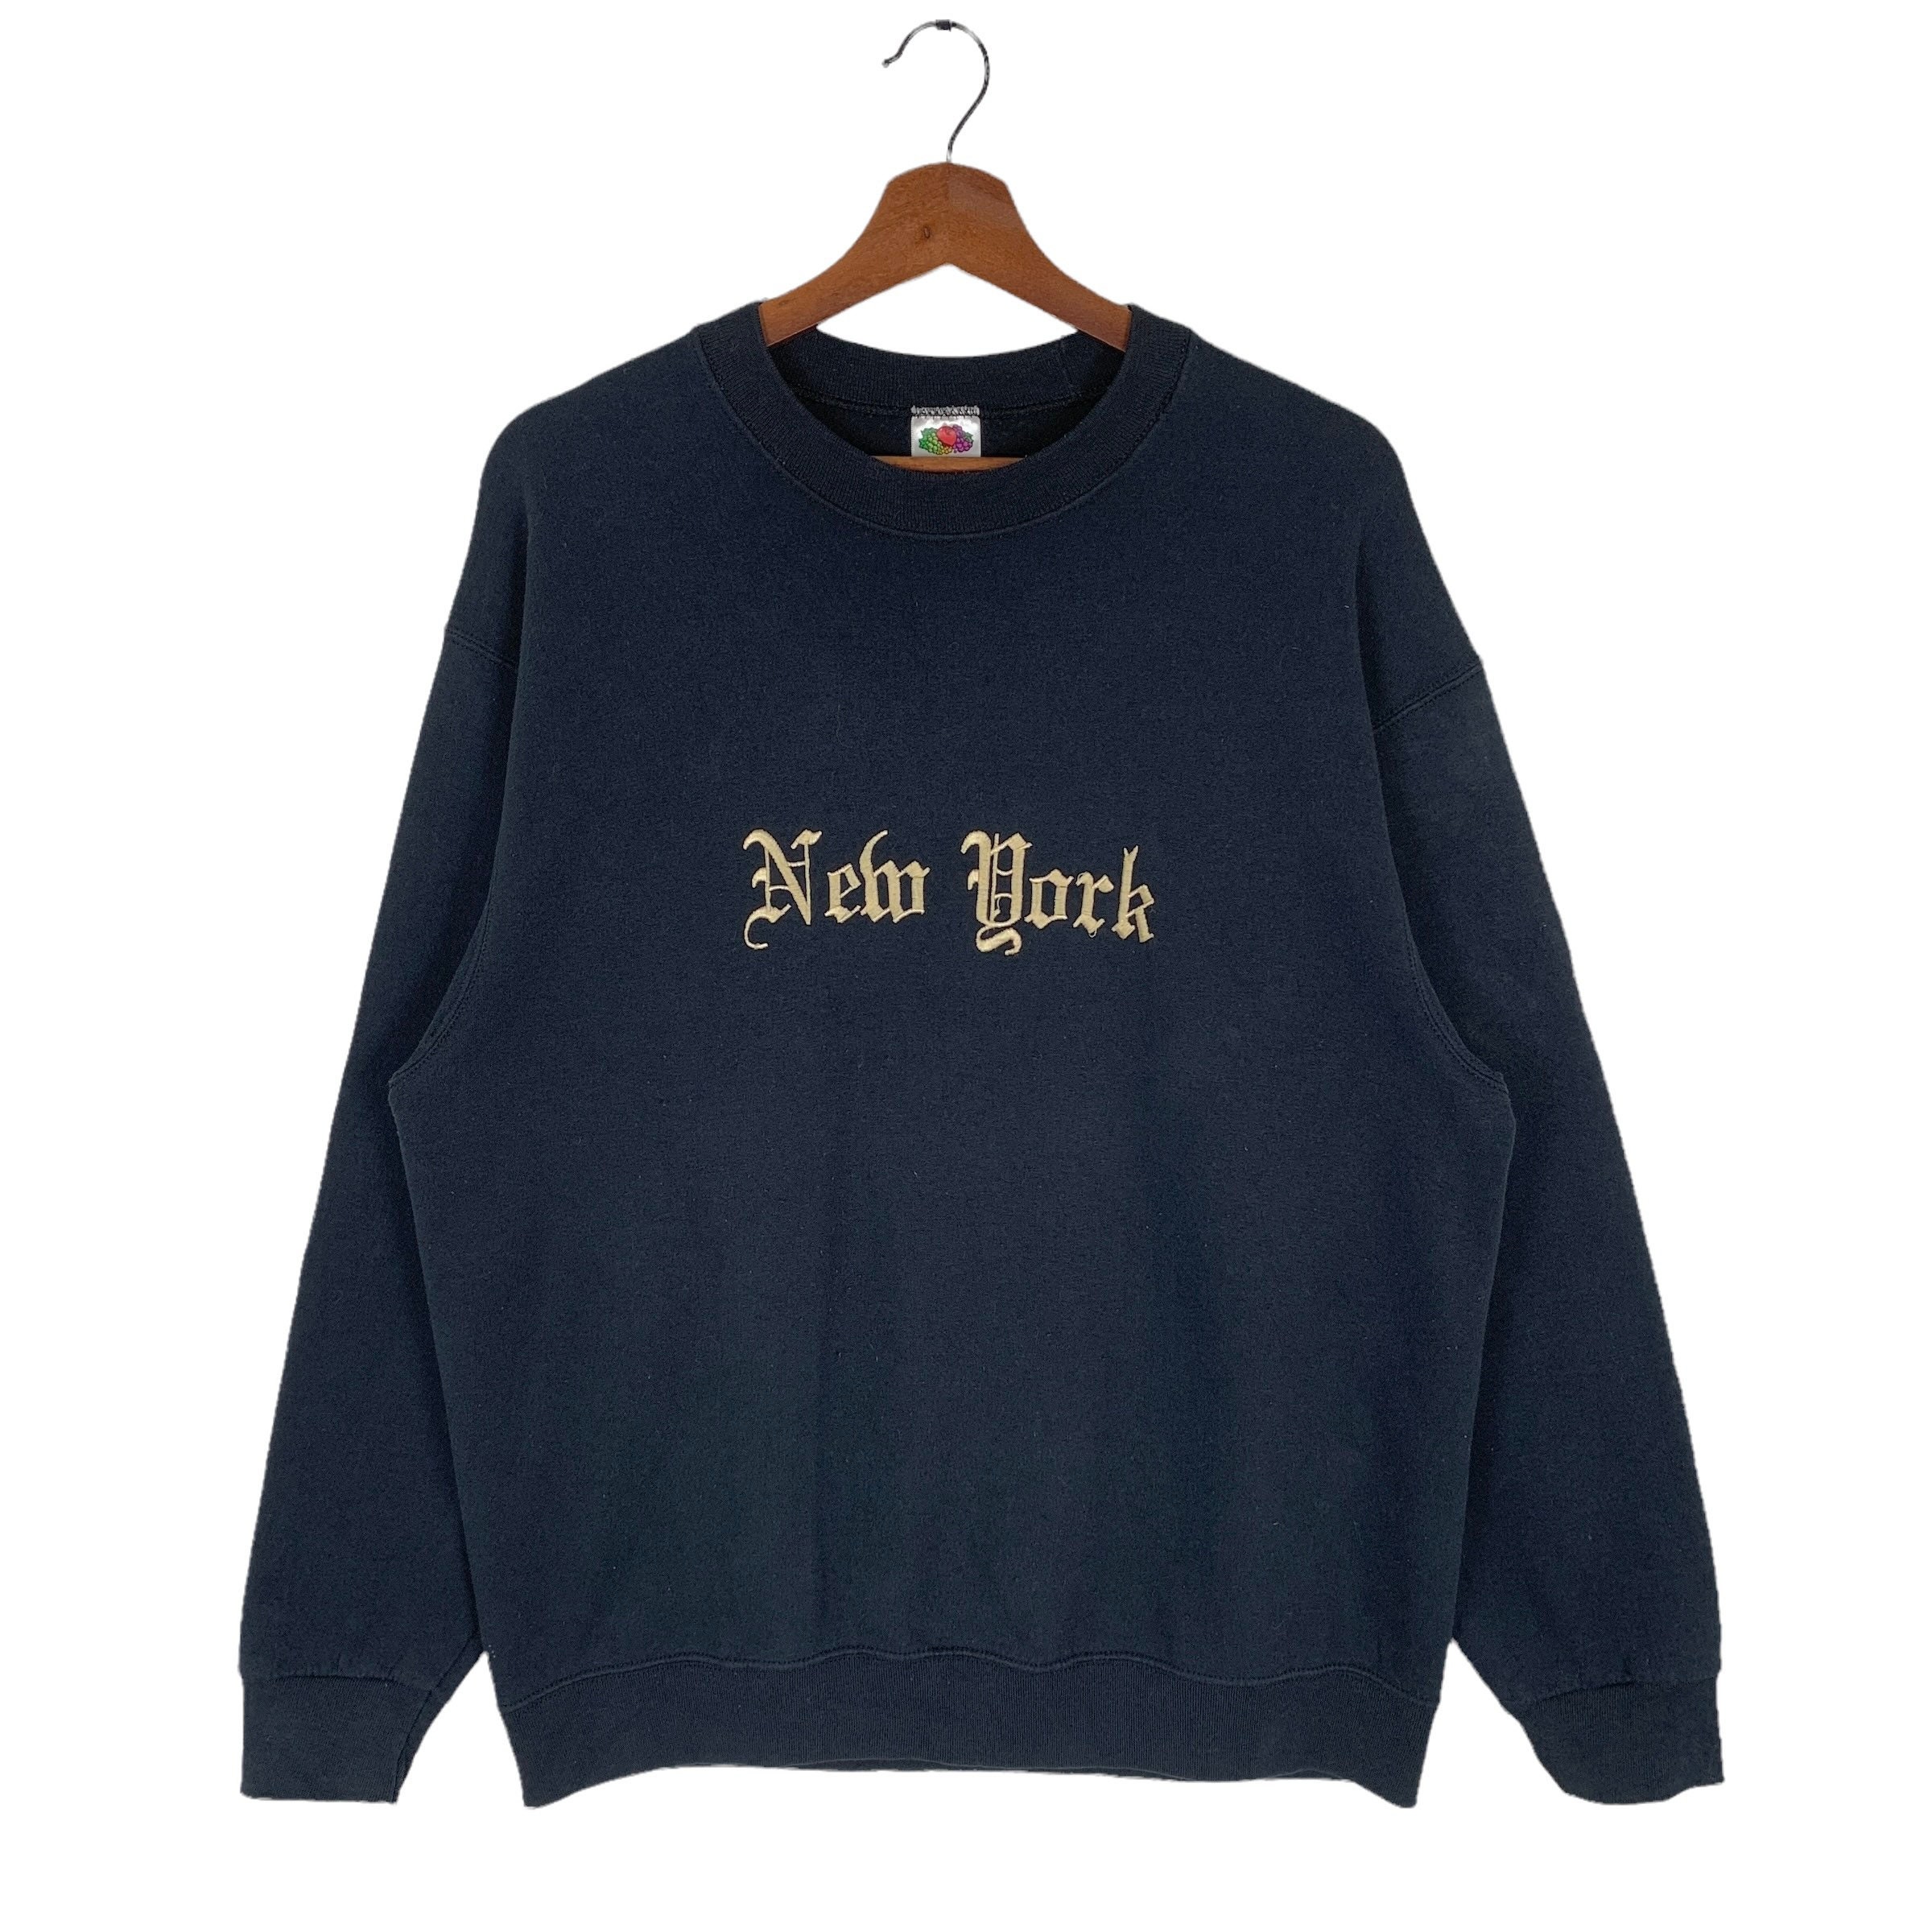 Vintage New York Sweatshirt - Etsy